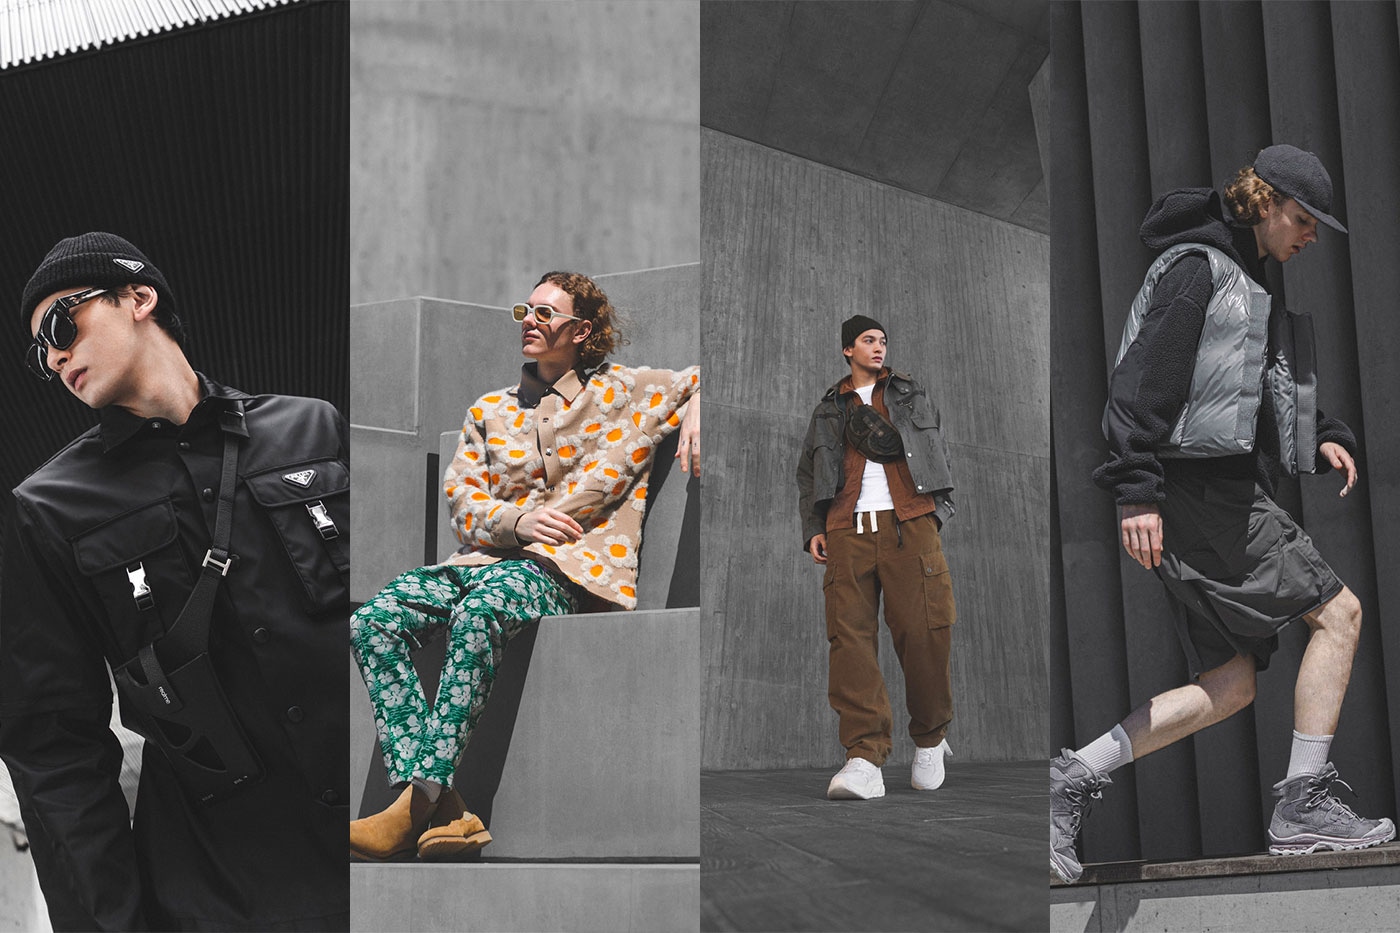 Saint Laurent - Teddy Wool Jacket  HBX - Globally Curated Fashion